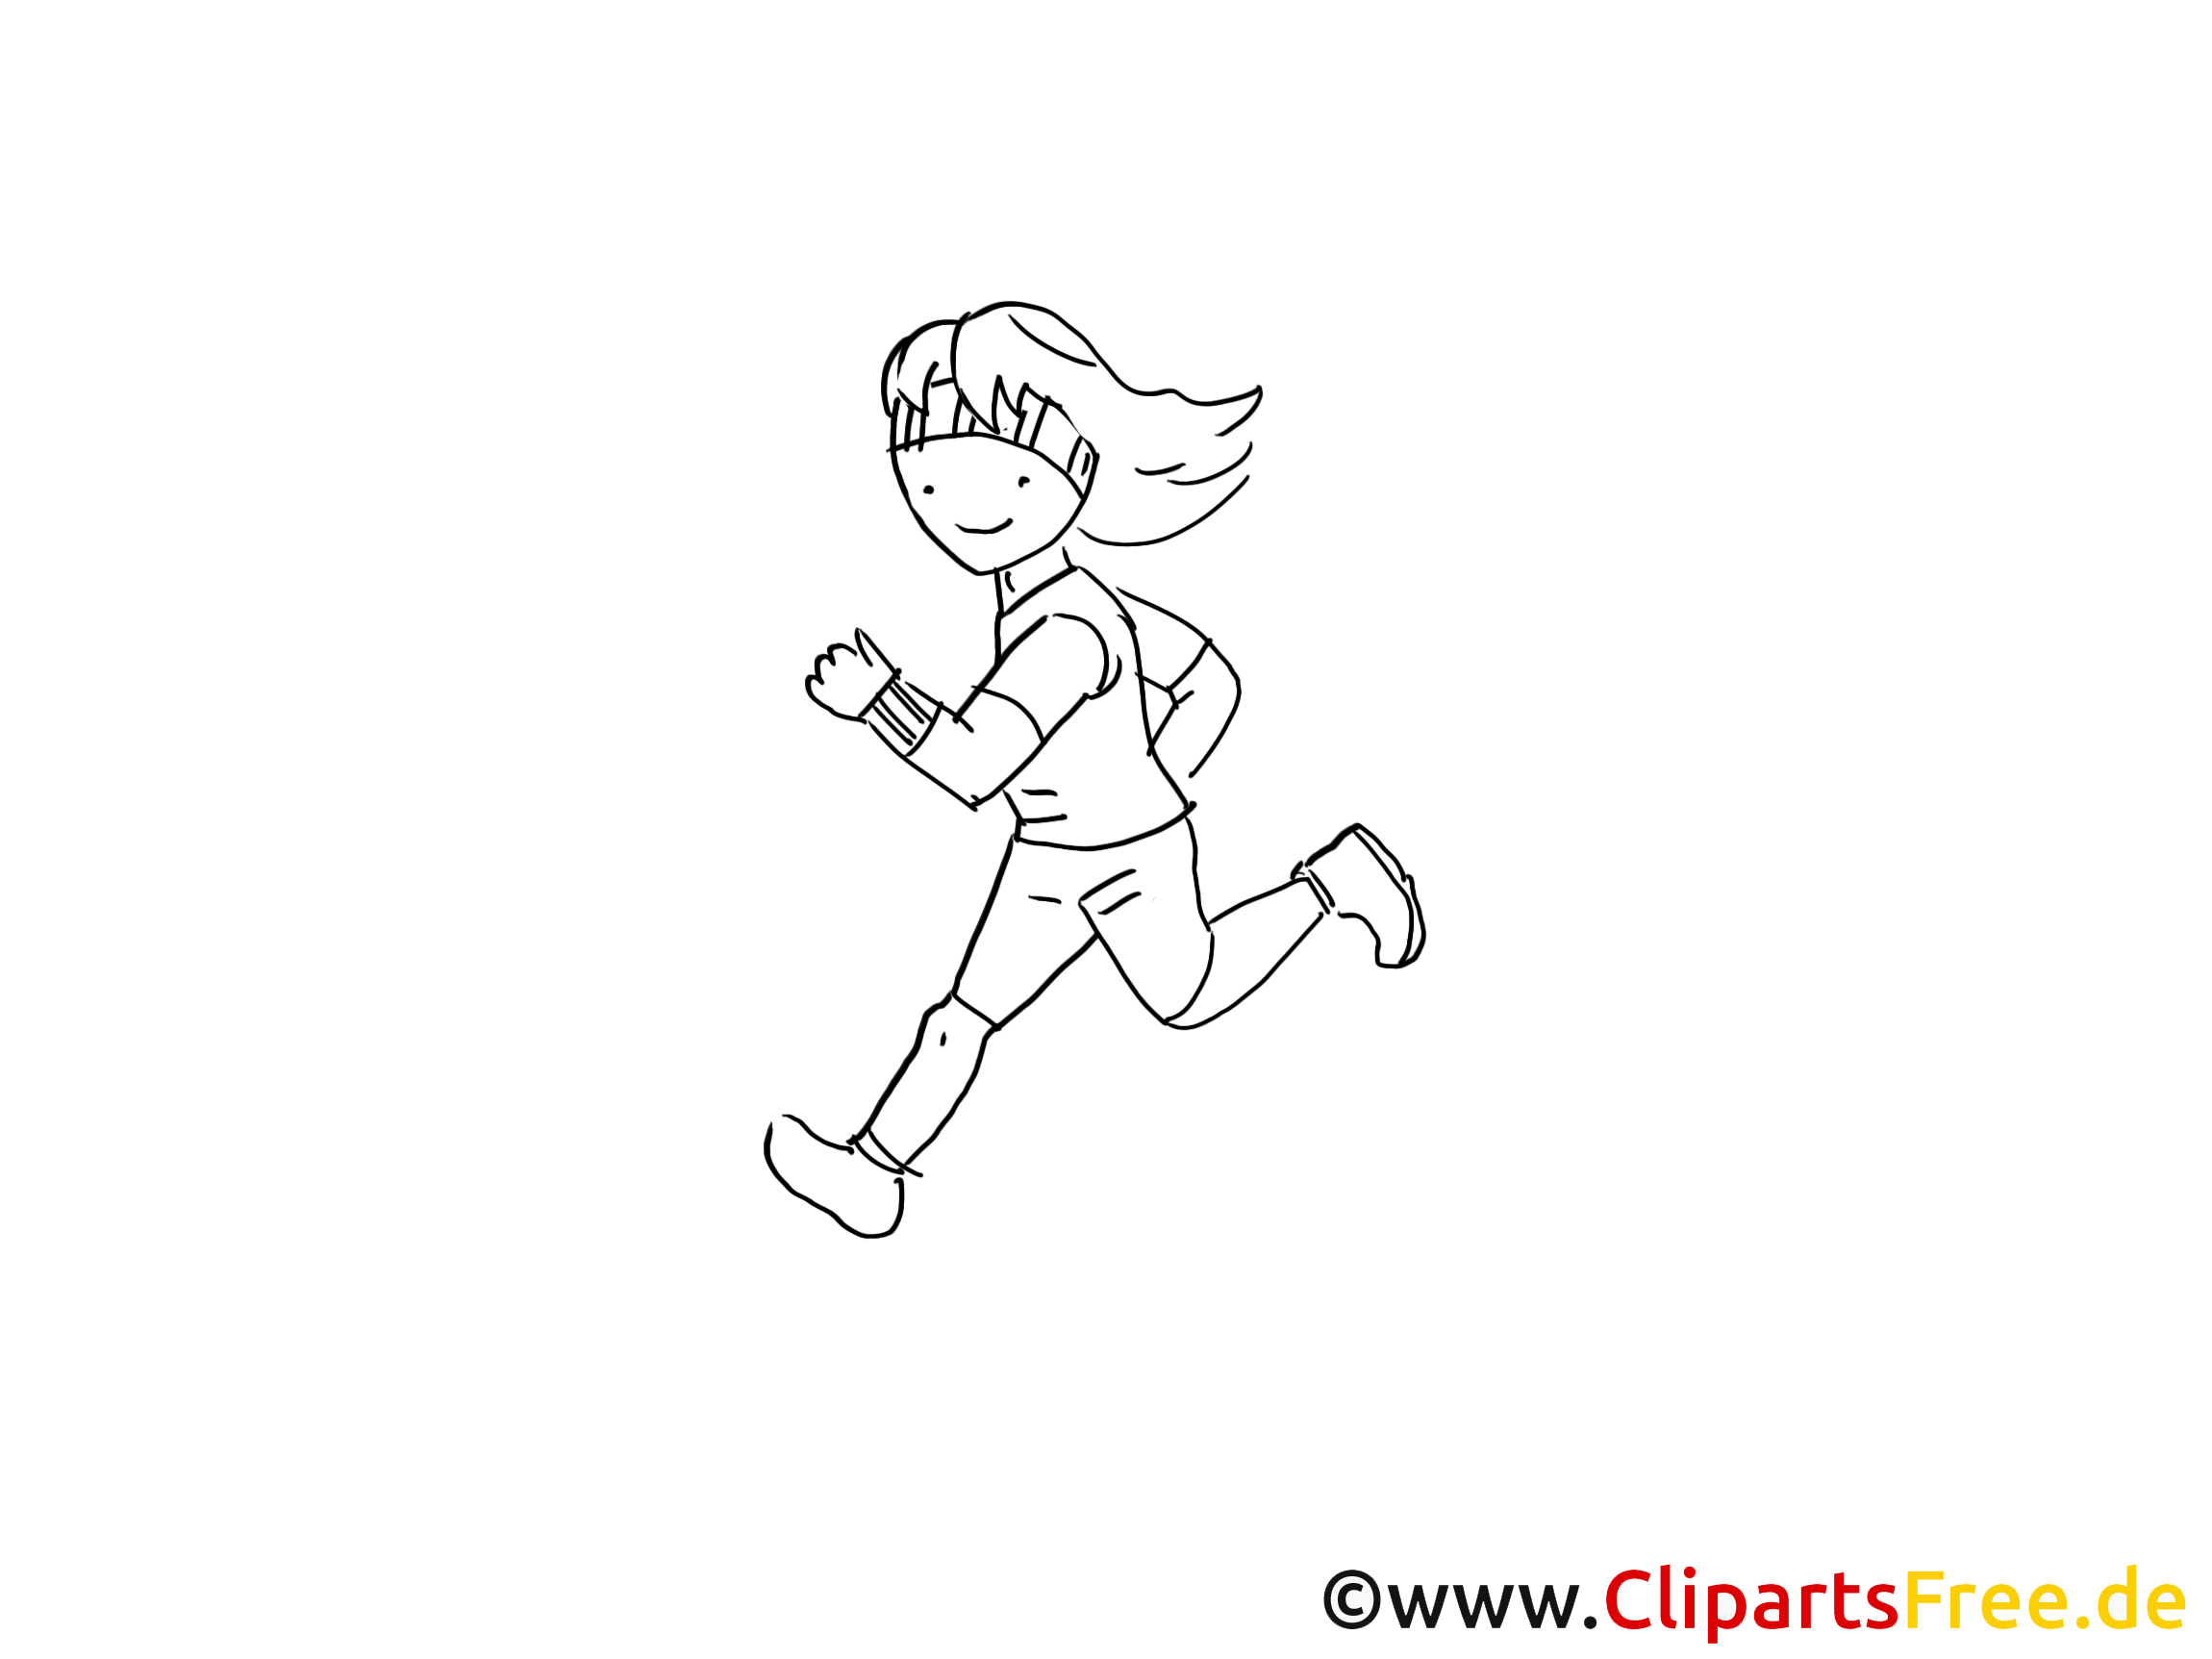 Jogging image à imprimer - Fille cliparts